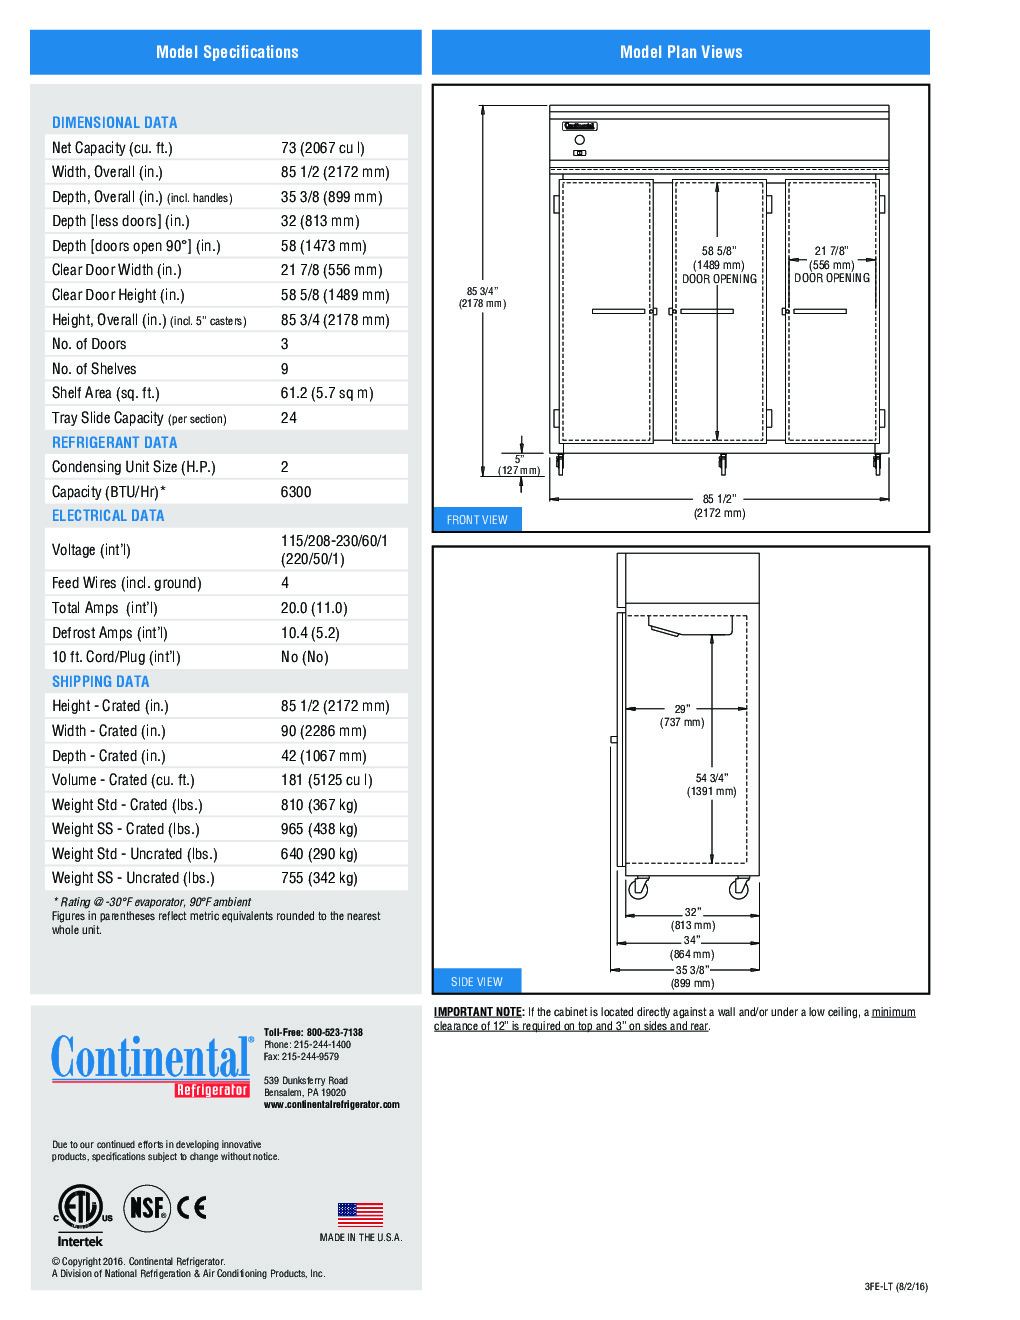 Continental Refrigerator 3FE-LT Reach-In Low Temperature Freezer